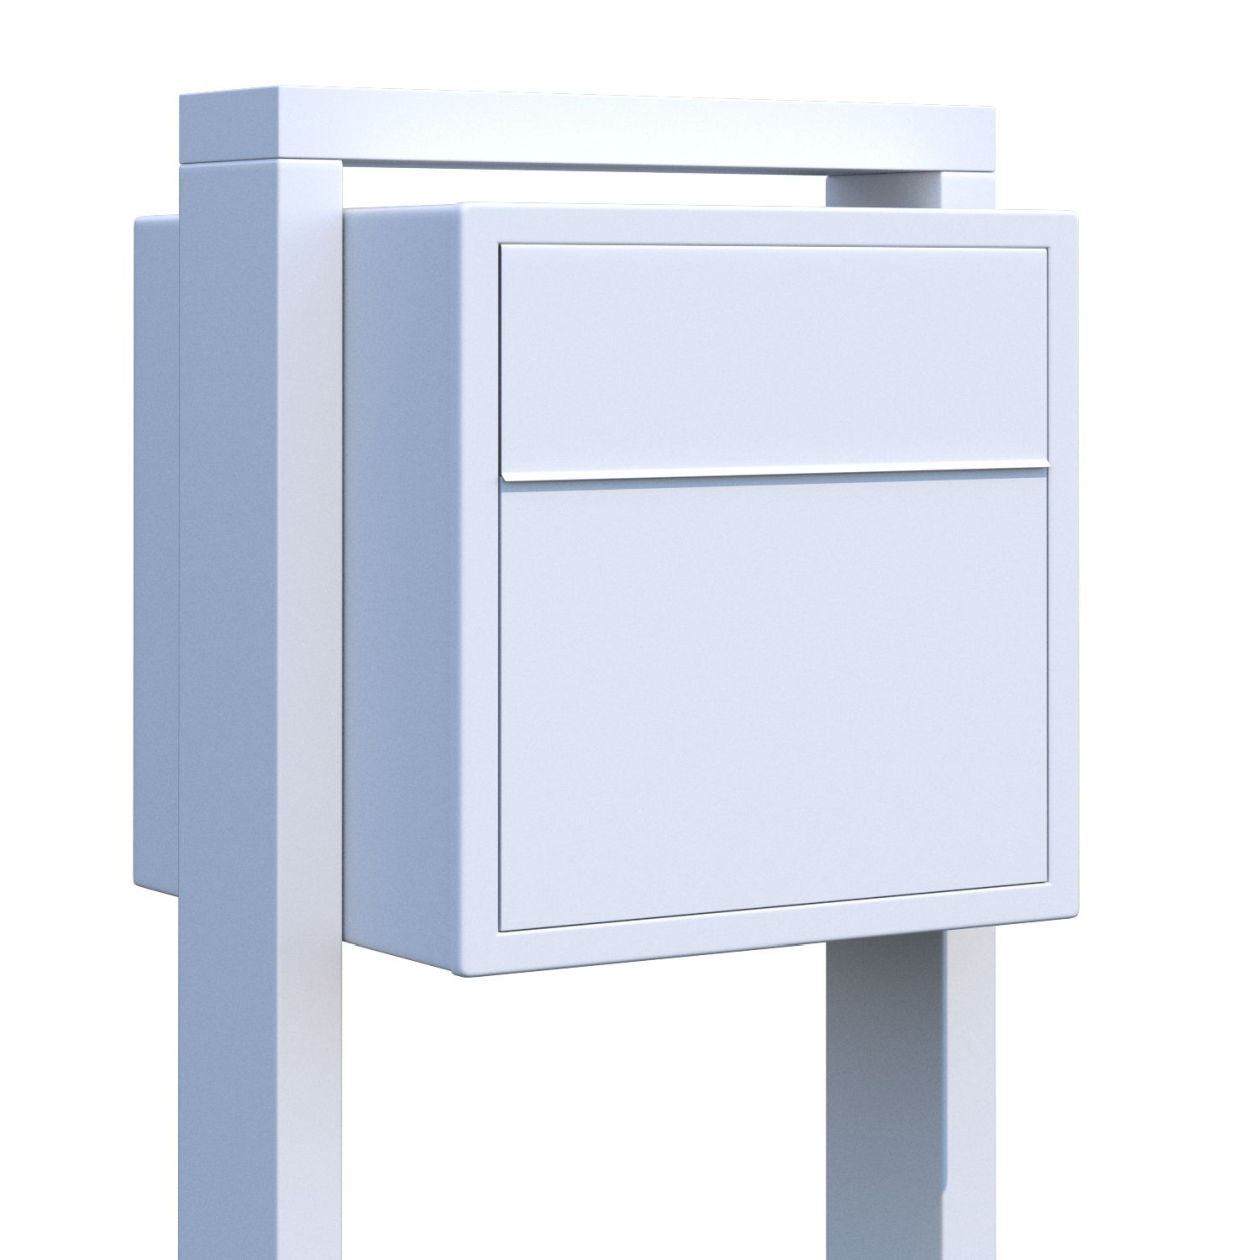 SOPRANO by Bravios - Modern post-mounted white mailbox